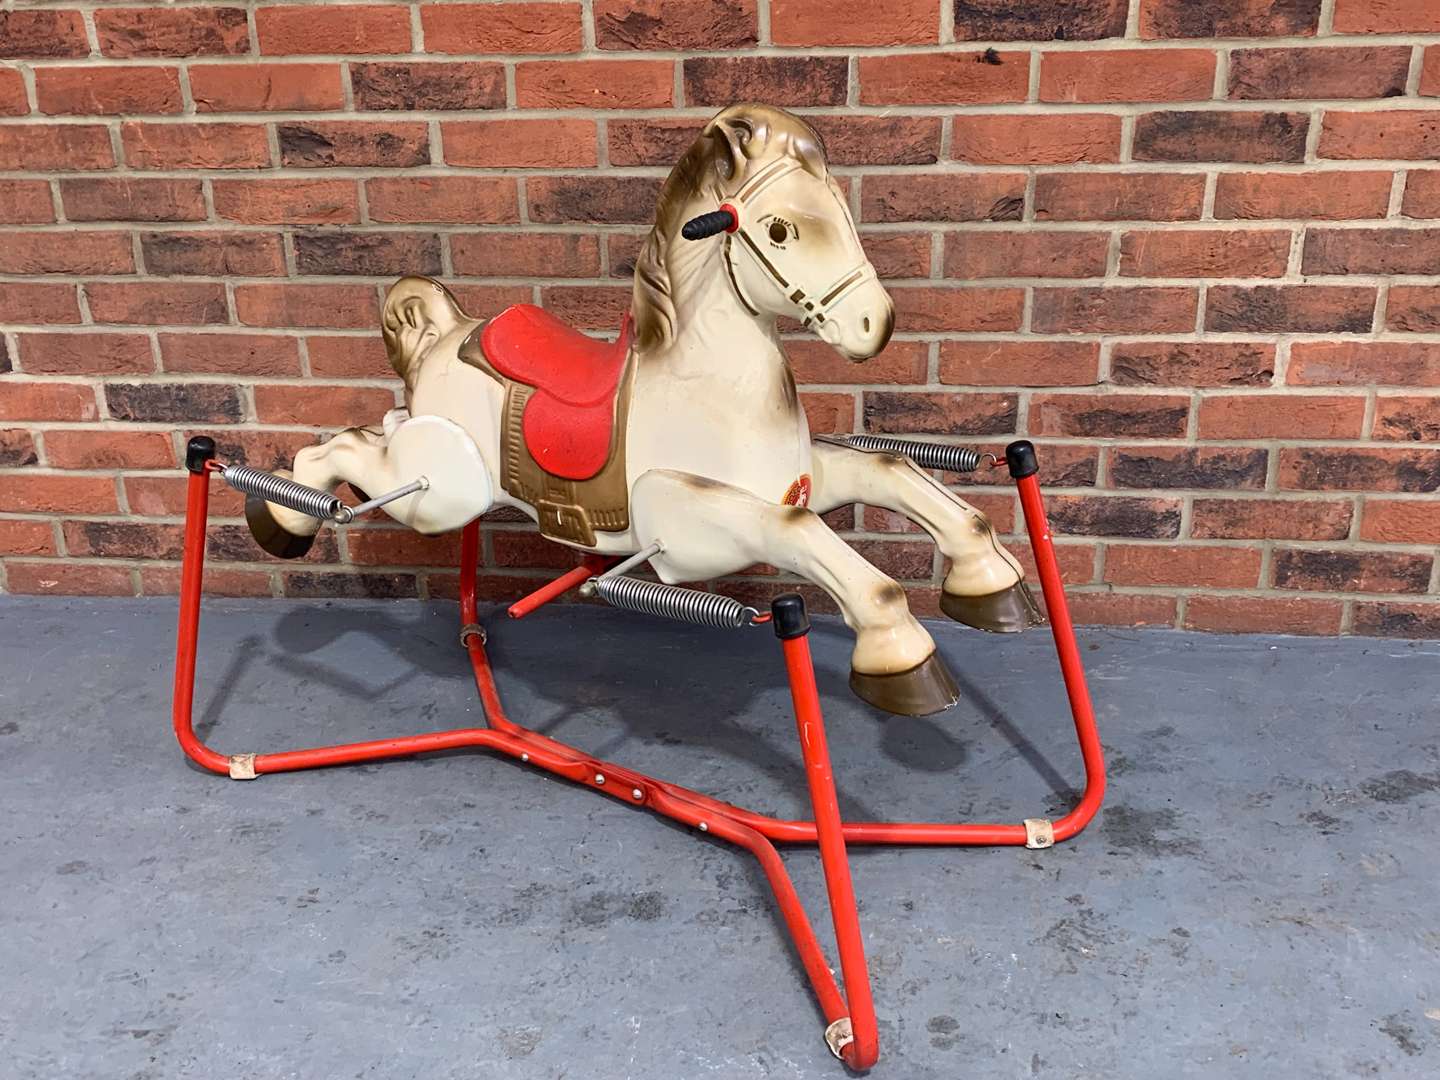 <p>Tin Plate MOBO Prairie King Child Ride on Horse</p>